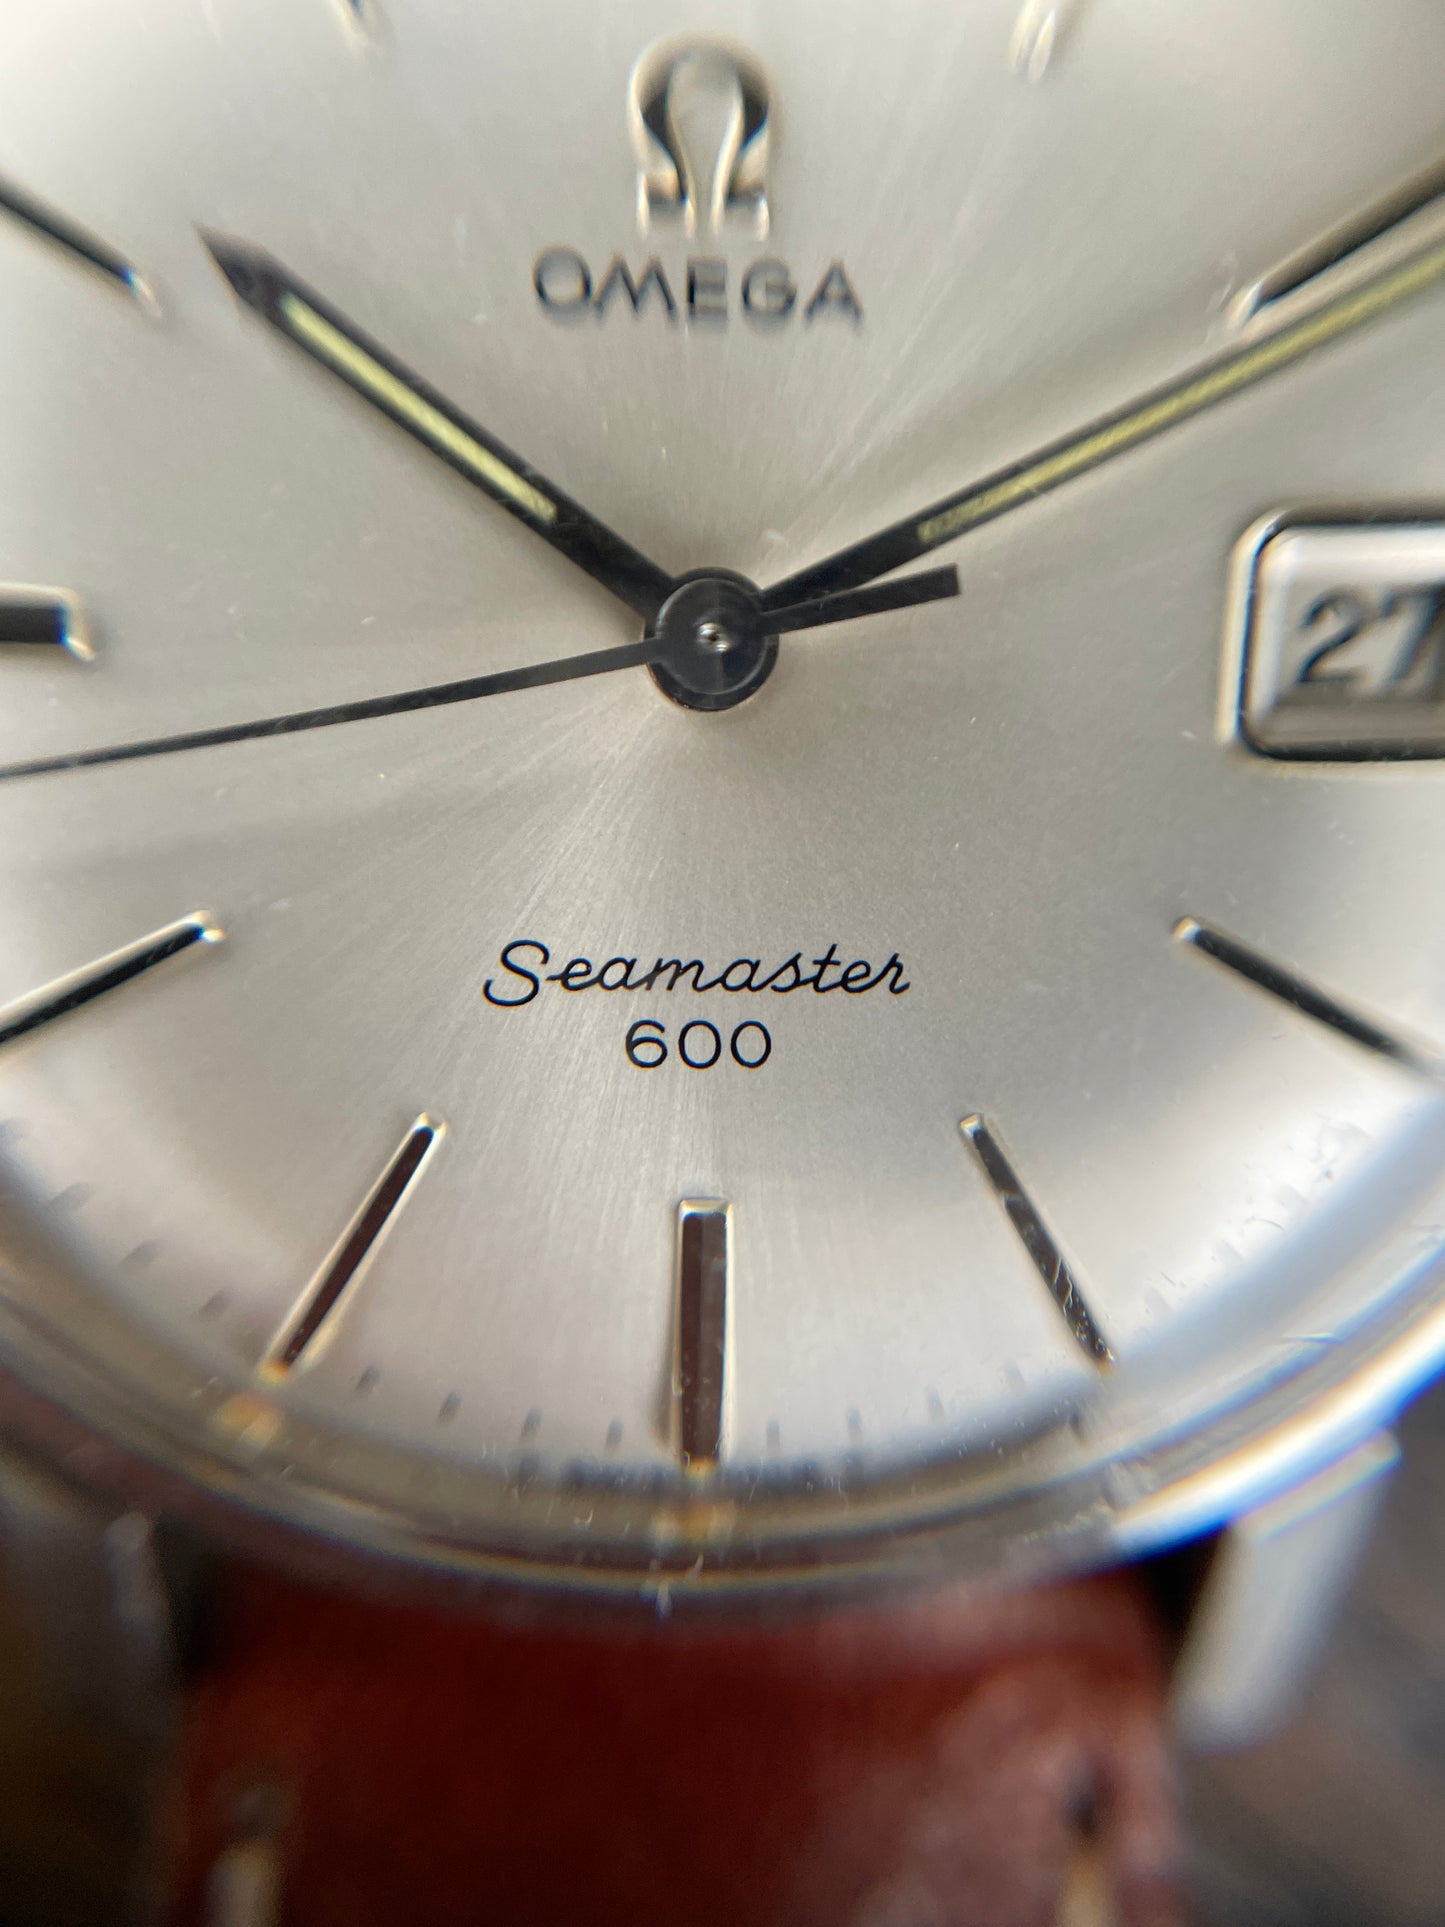 Omega Seamaster 600 - 136.011